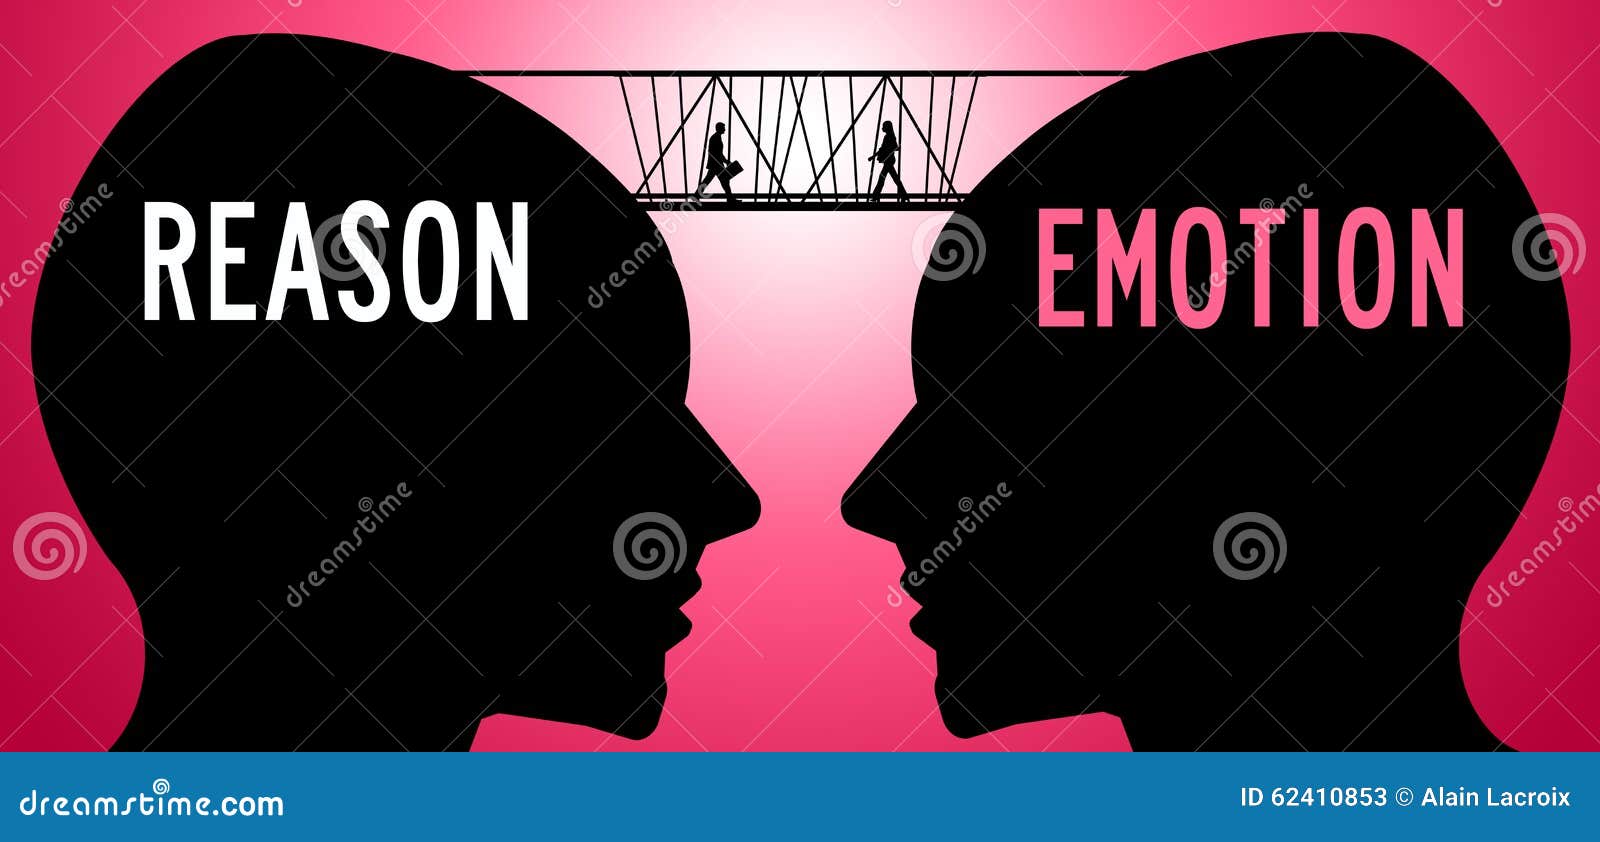 reason emotion